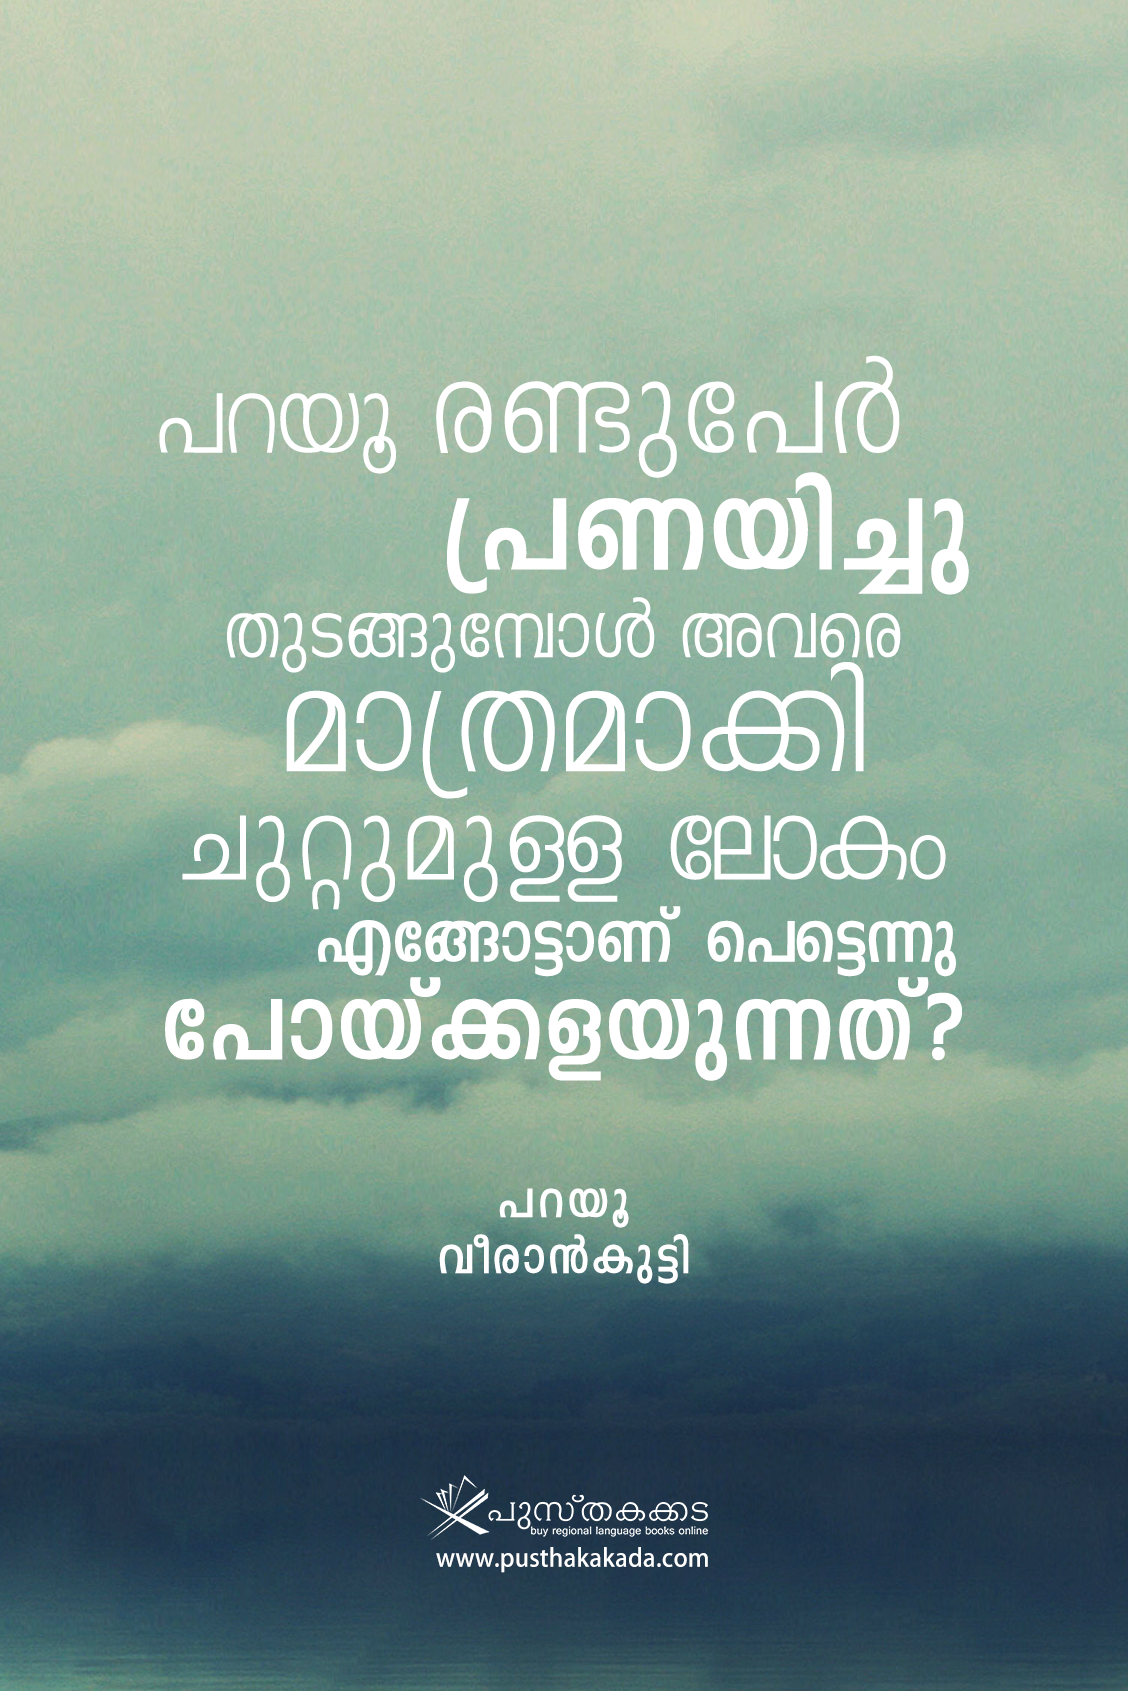 Malayalam poems malayalam qoutes typo pusthakakada Facebook promotion vaikom muhammad basheer Balachandran chullikadu O V Vijayan Kunjunni mash virankutty